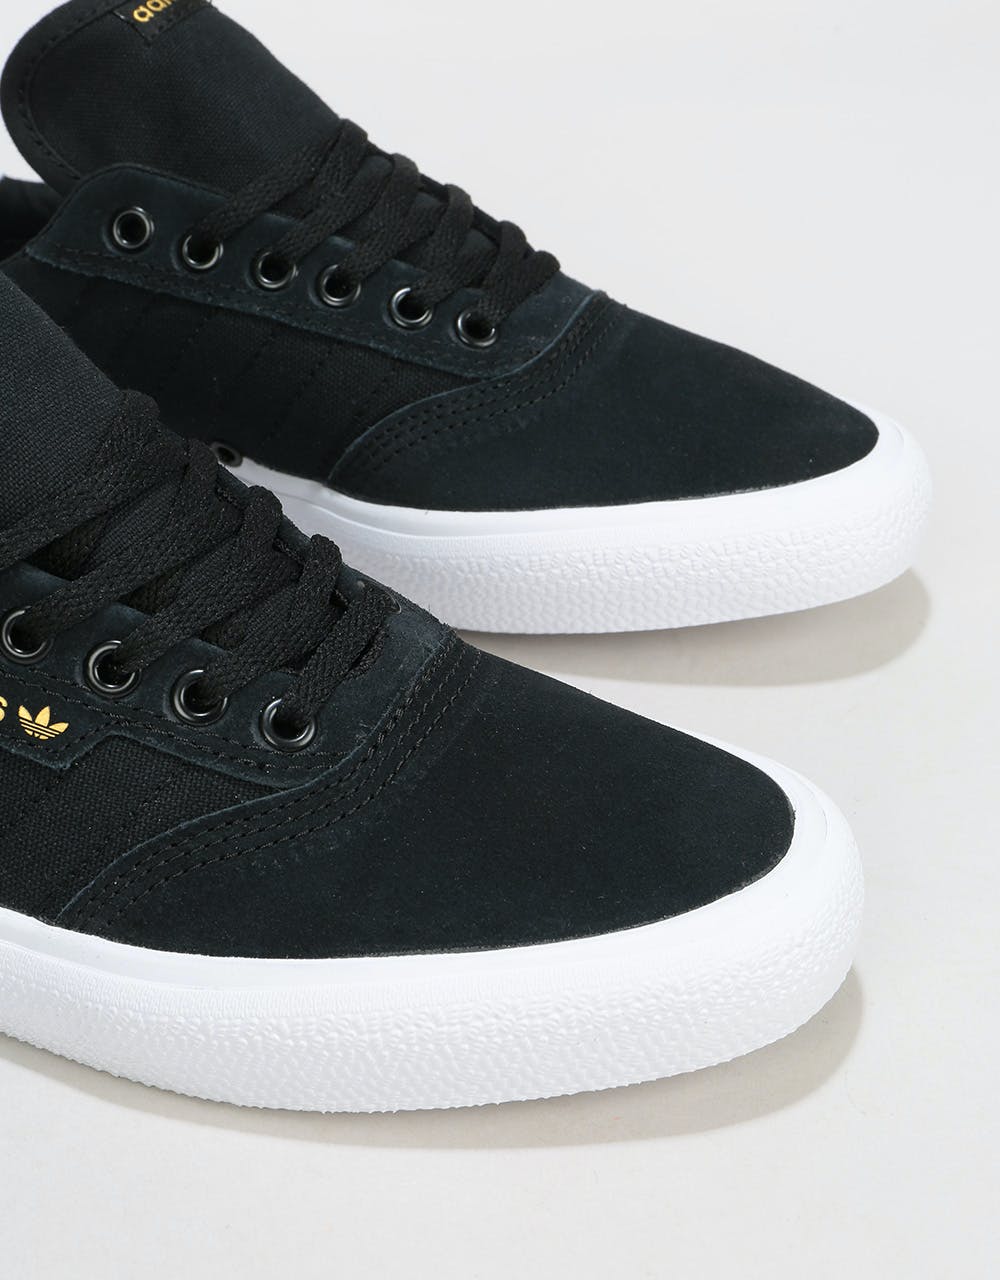 Adidas 3MC Skate Shoes - Core Black/White/Core Black